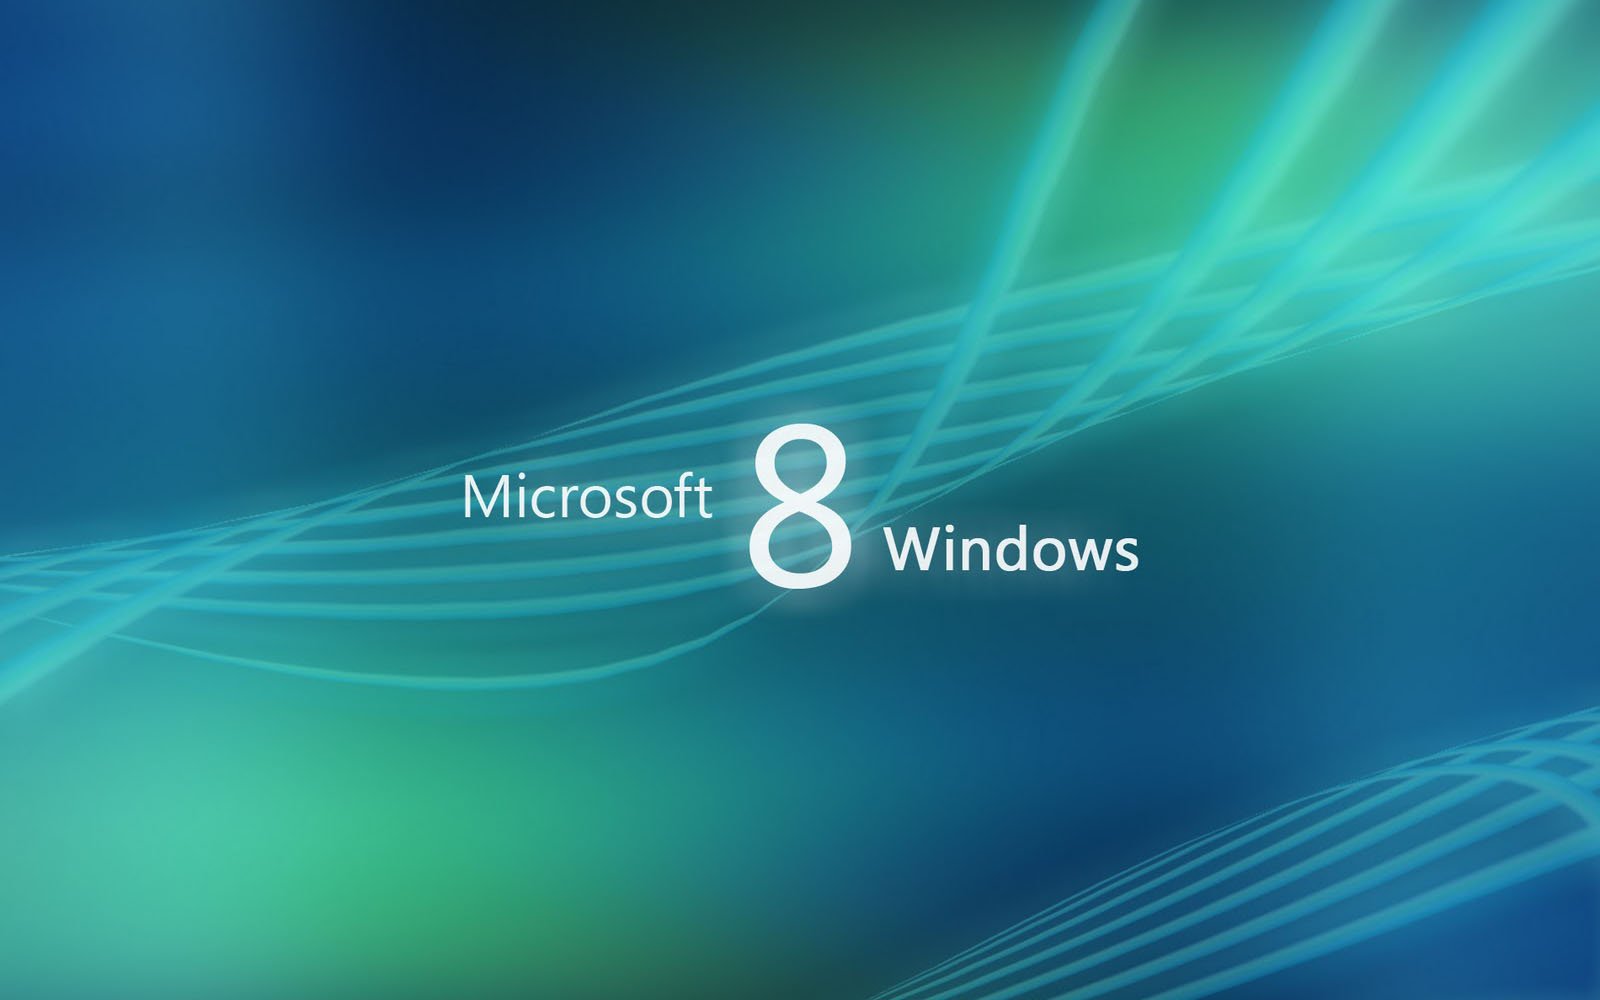 The Windows 8 Themes Windows 8 Latest Desktop Background Themes